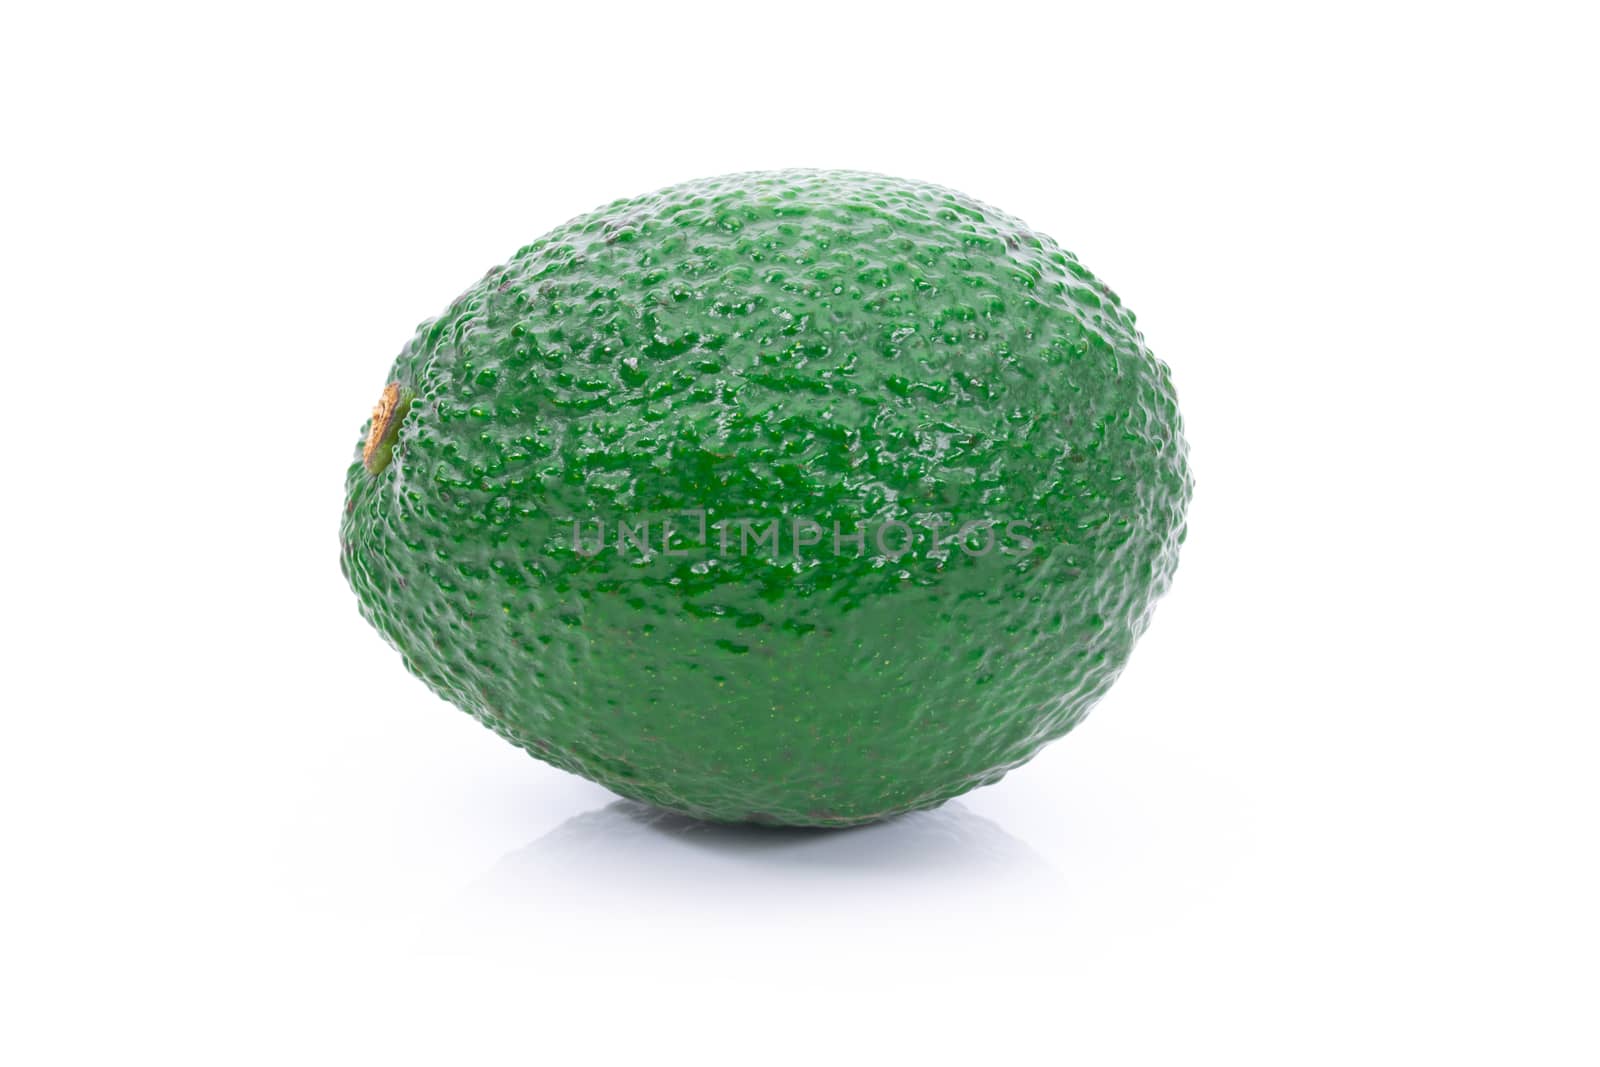 Avocado fruit on a white background